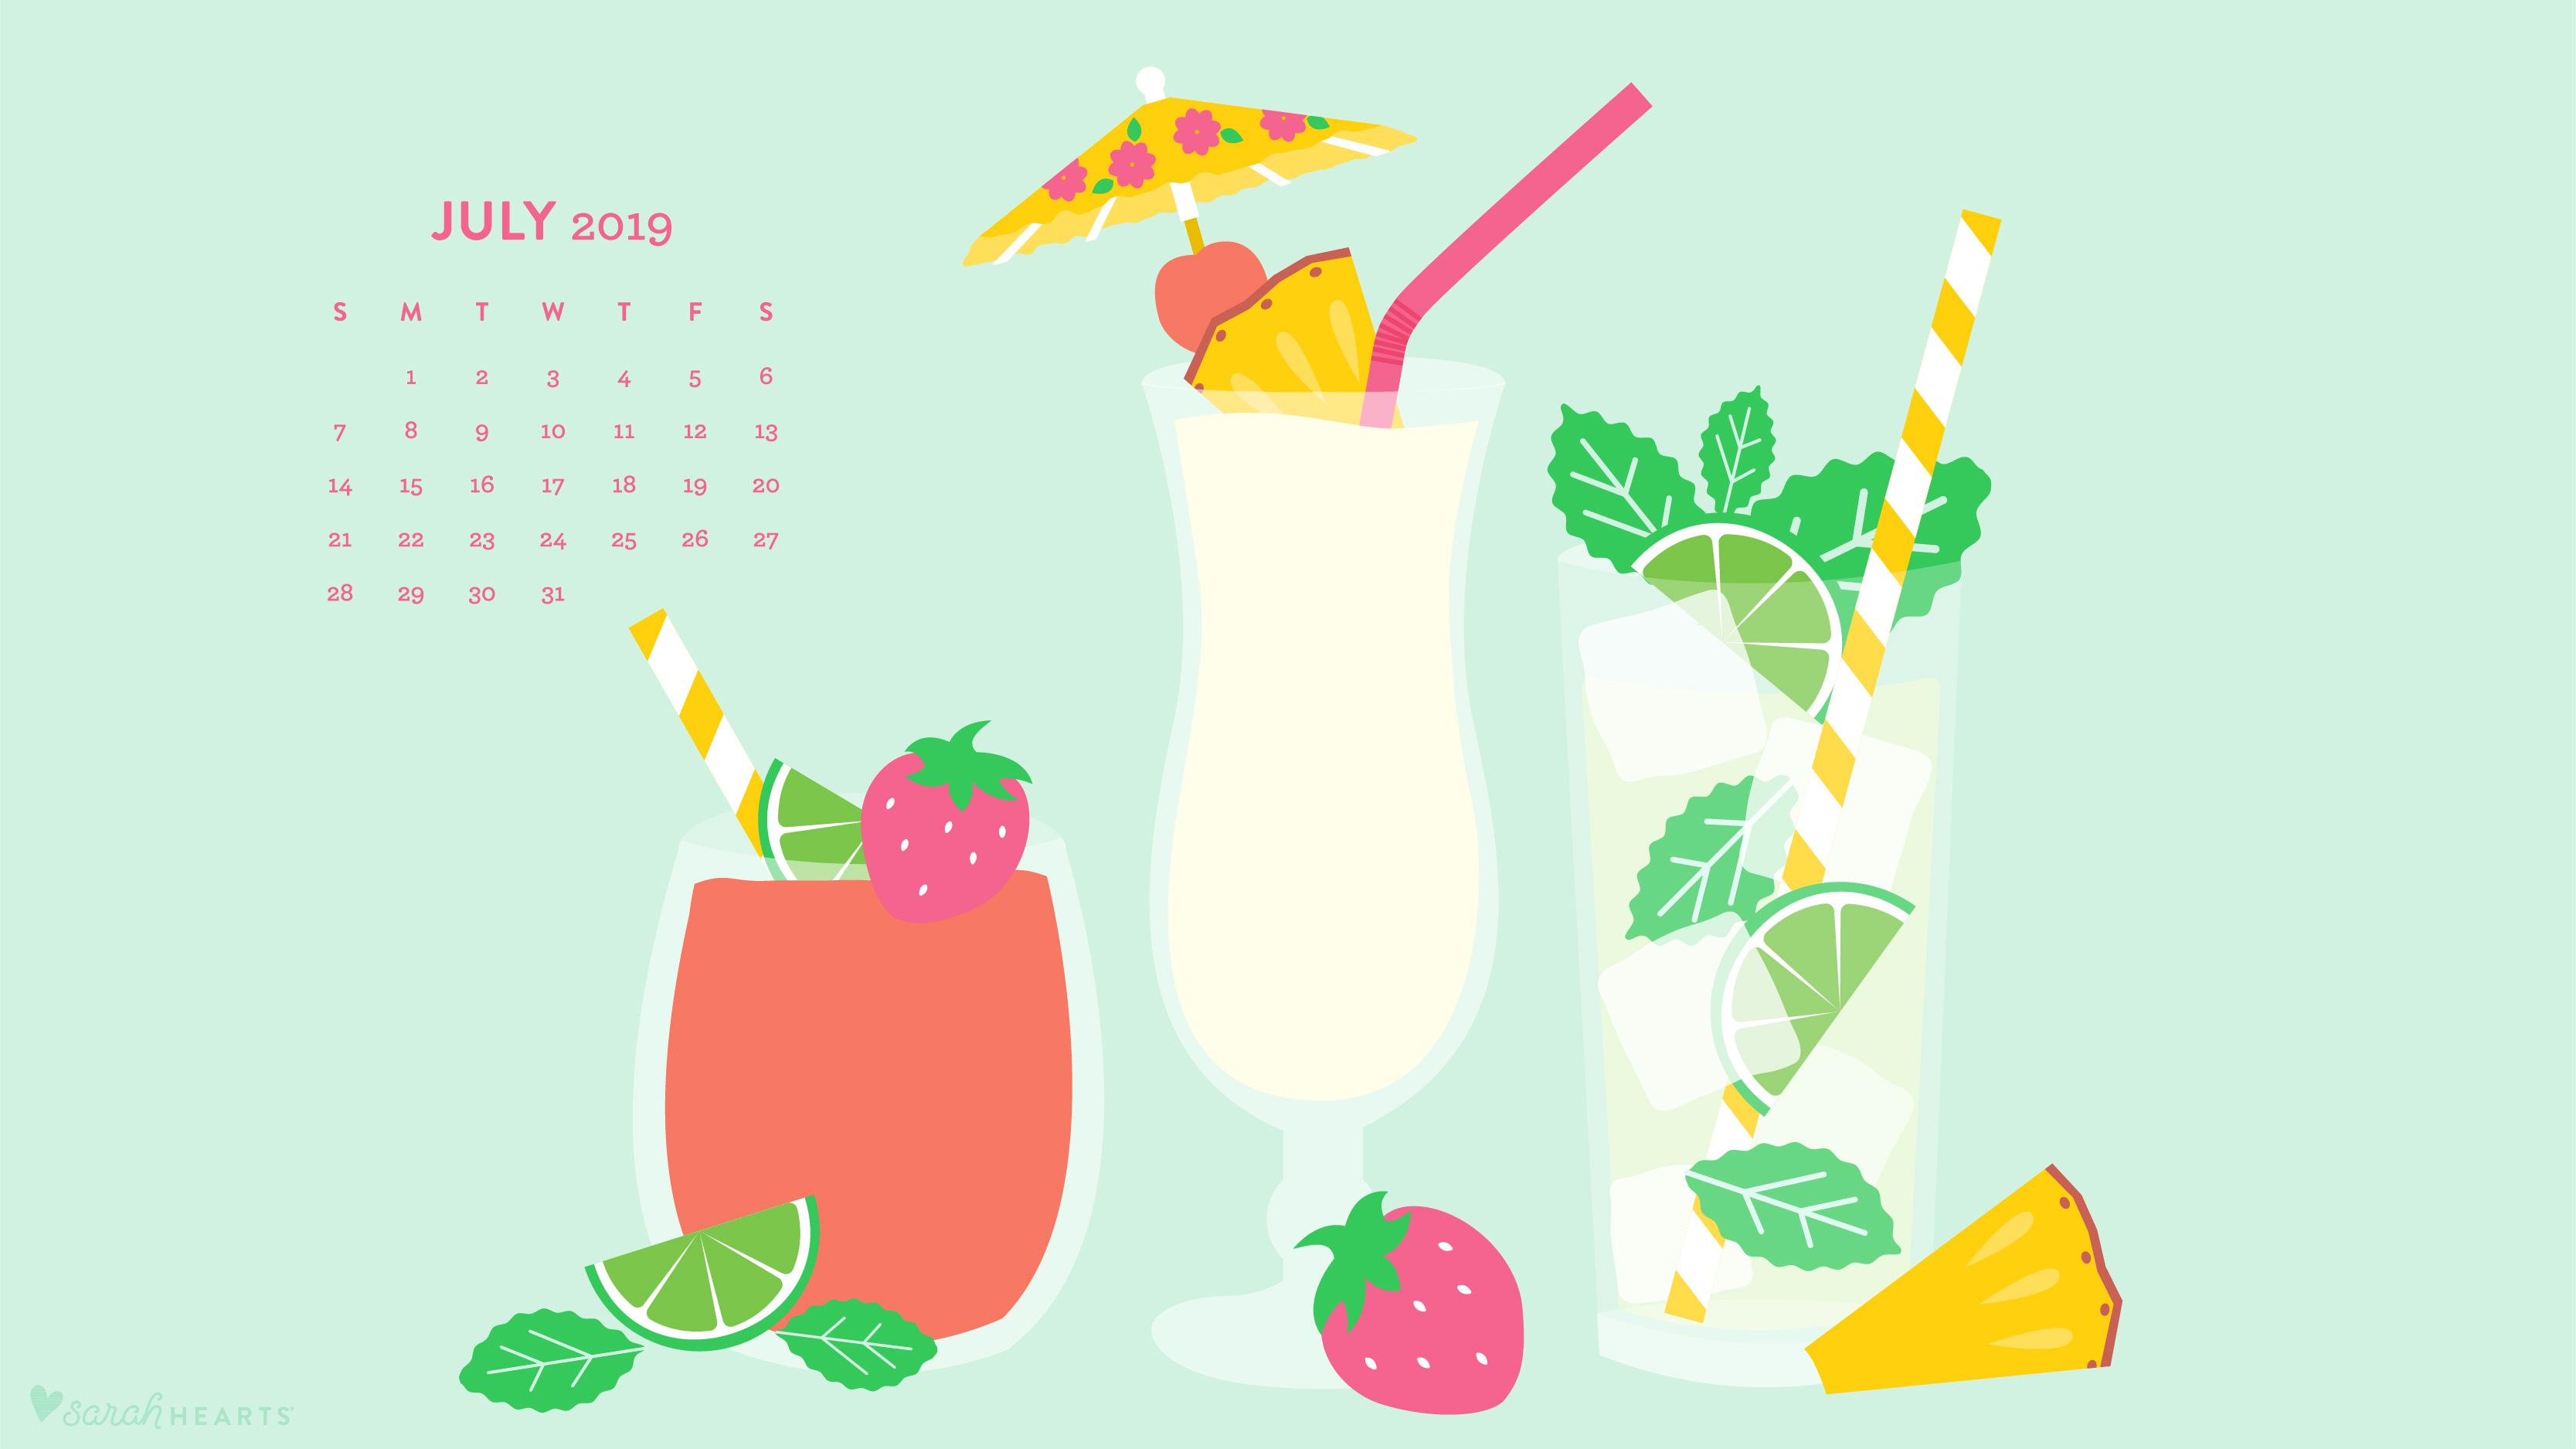 July Summer Drinks Calendar Wallpaper Sarah Hearts